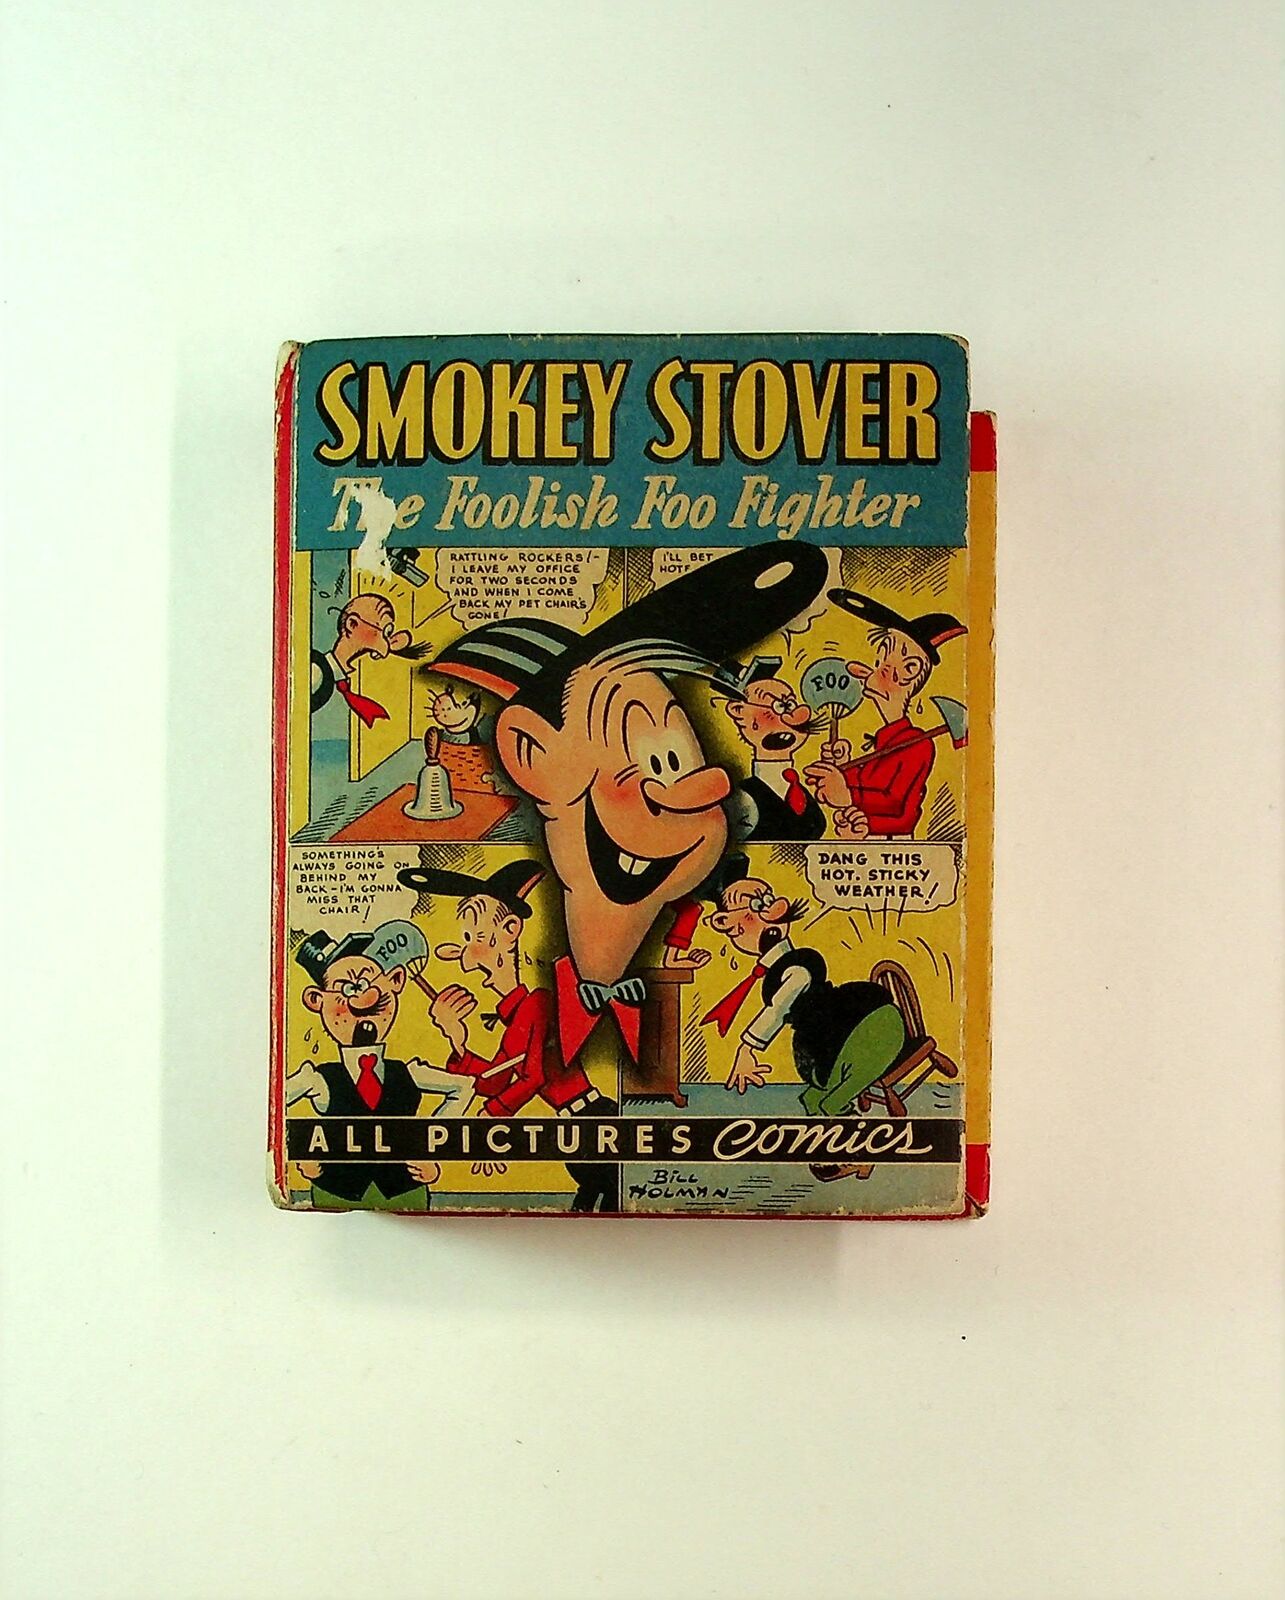 Smokey Stover the Foolish Foo Fighter #1481 FN- 5.5 1942